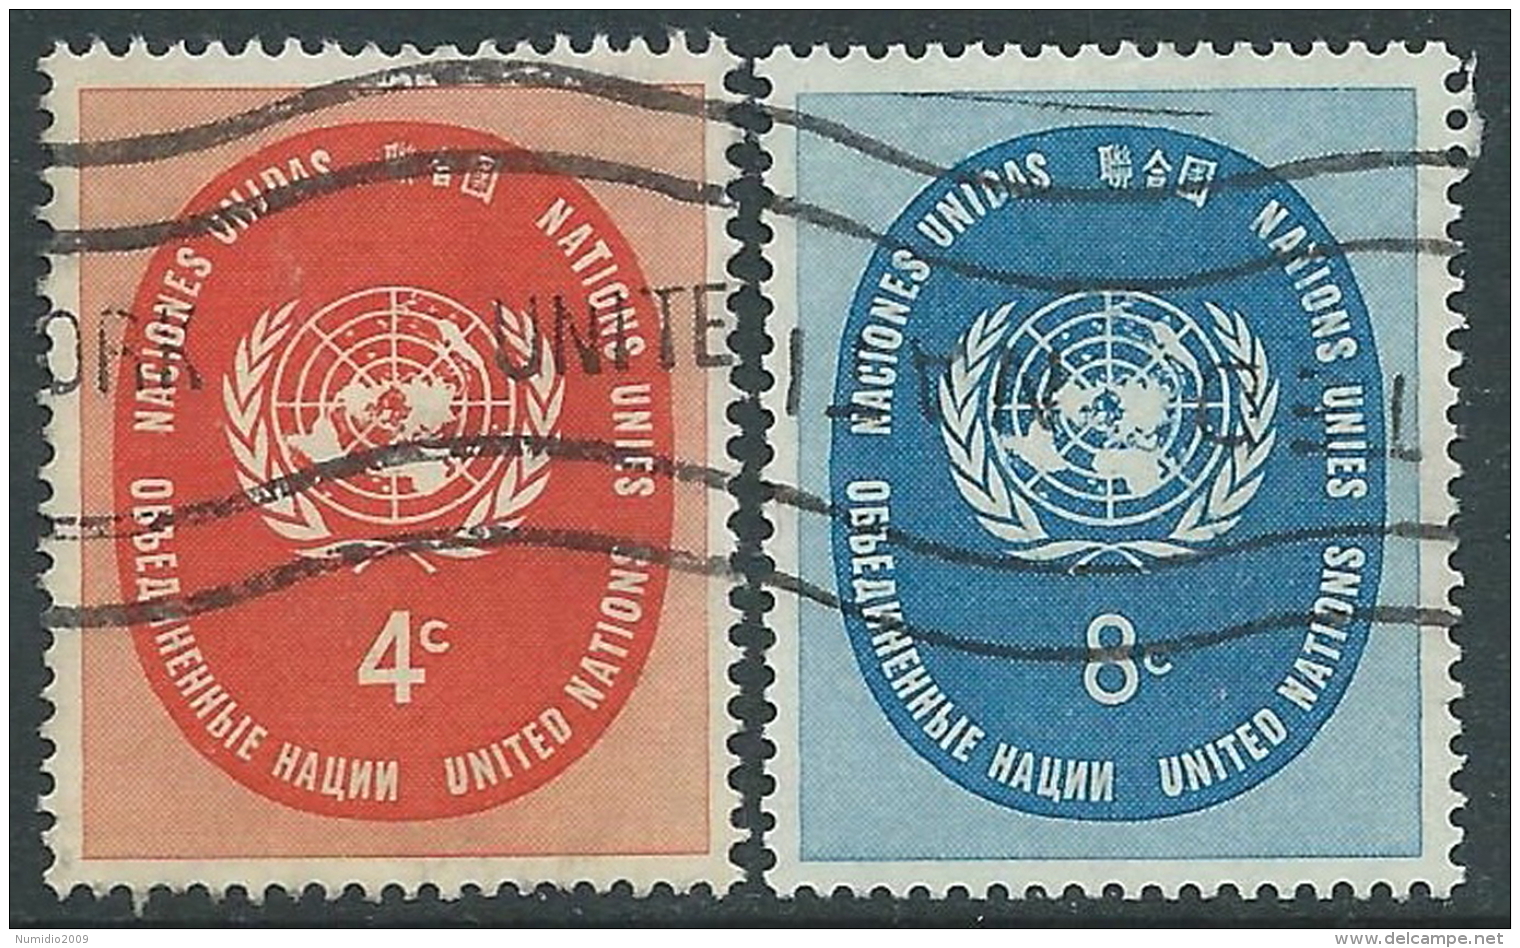 1958 NAZIONI UNITE NEW YORK USATO EMBLEMA - Z12-8 - Oblitérés